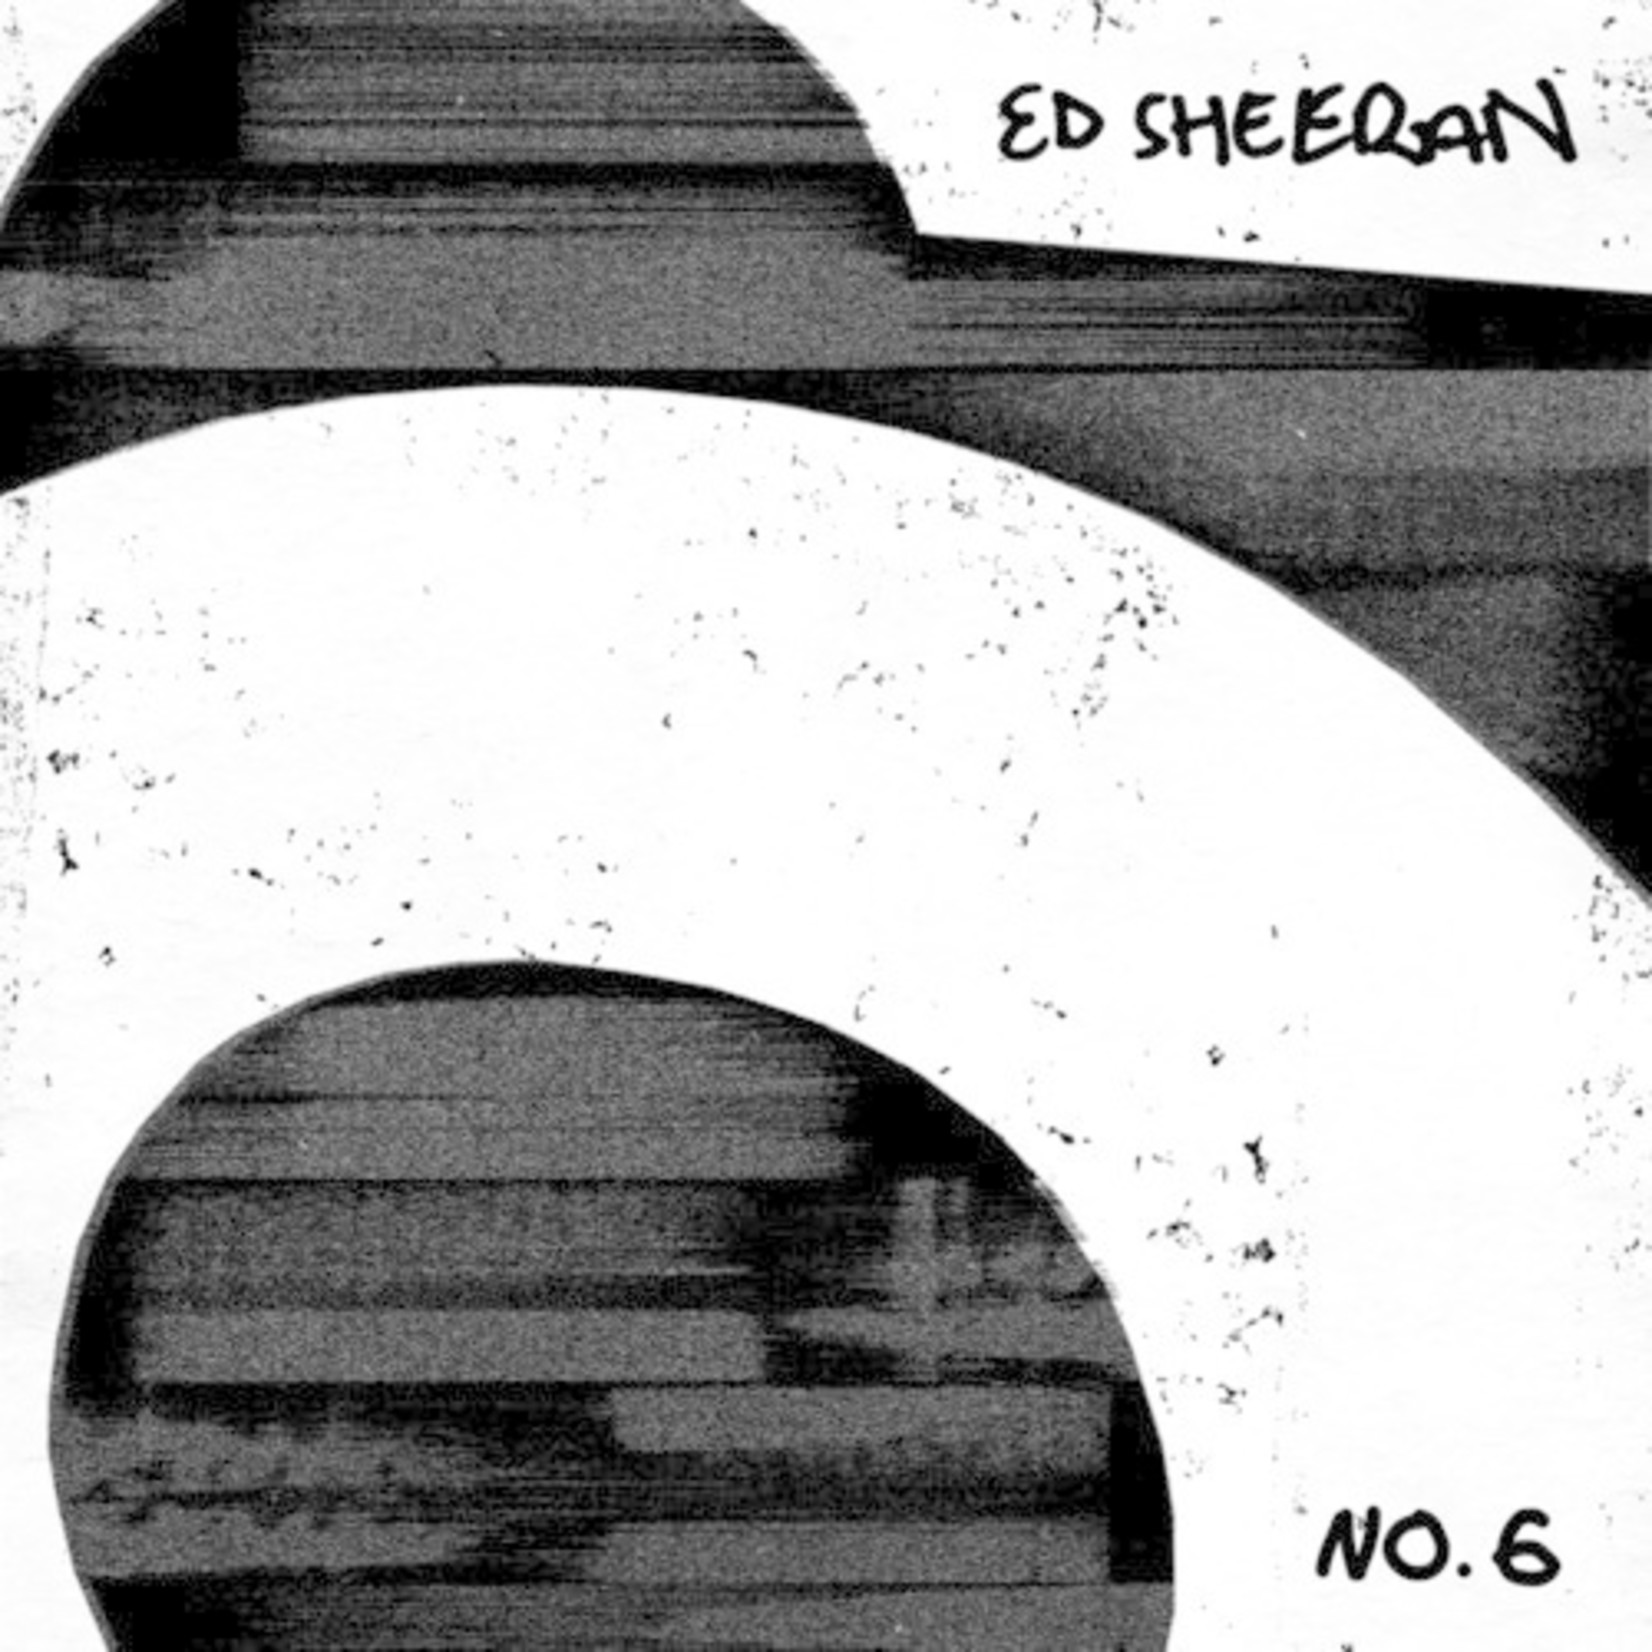 Asylum Ed Sheeran - No 6 Collaborations Project (CD)